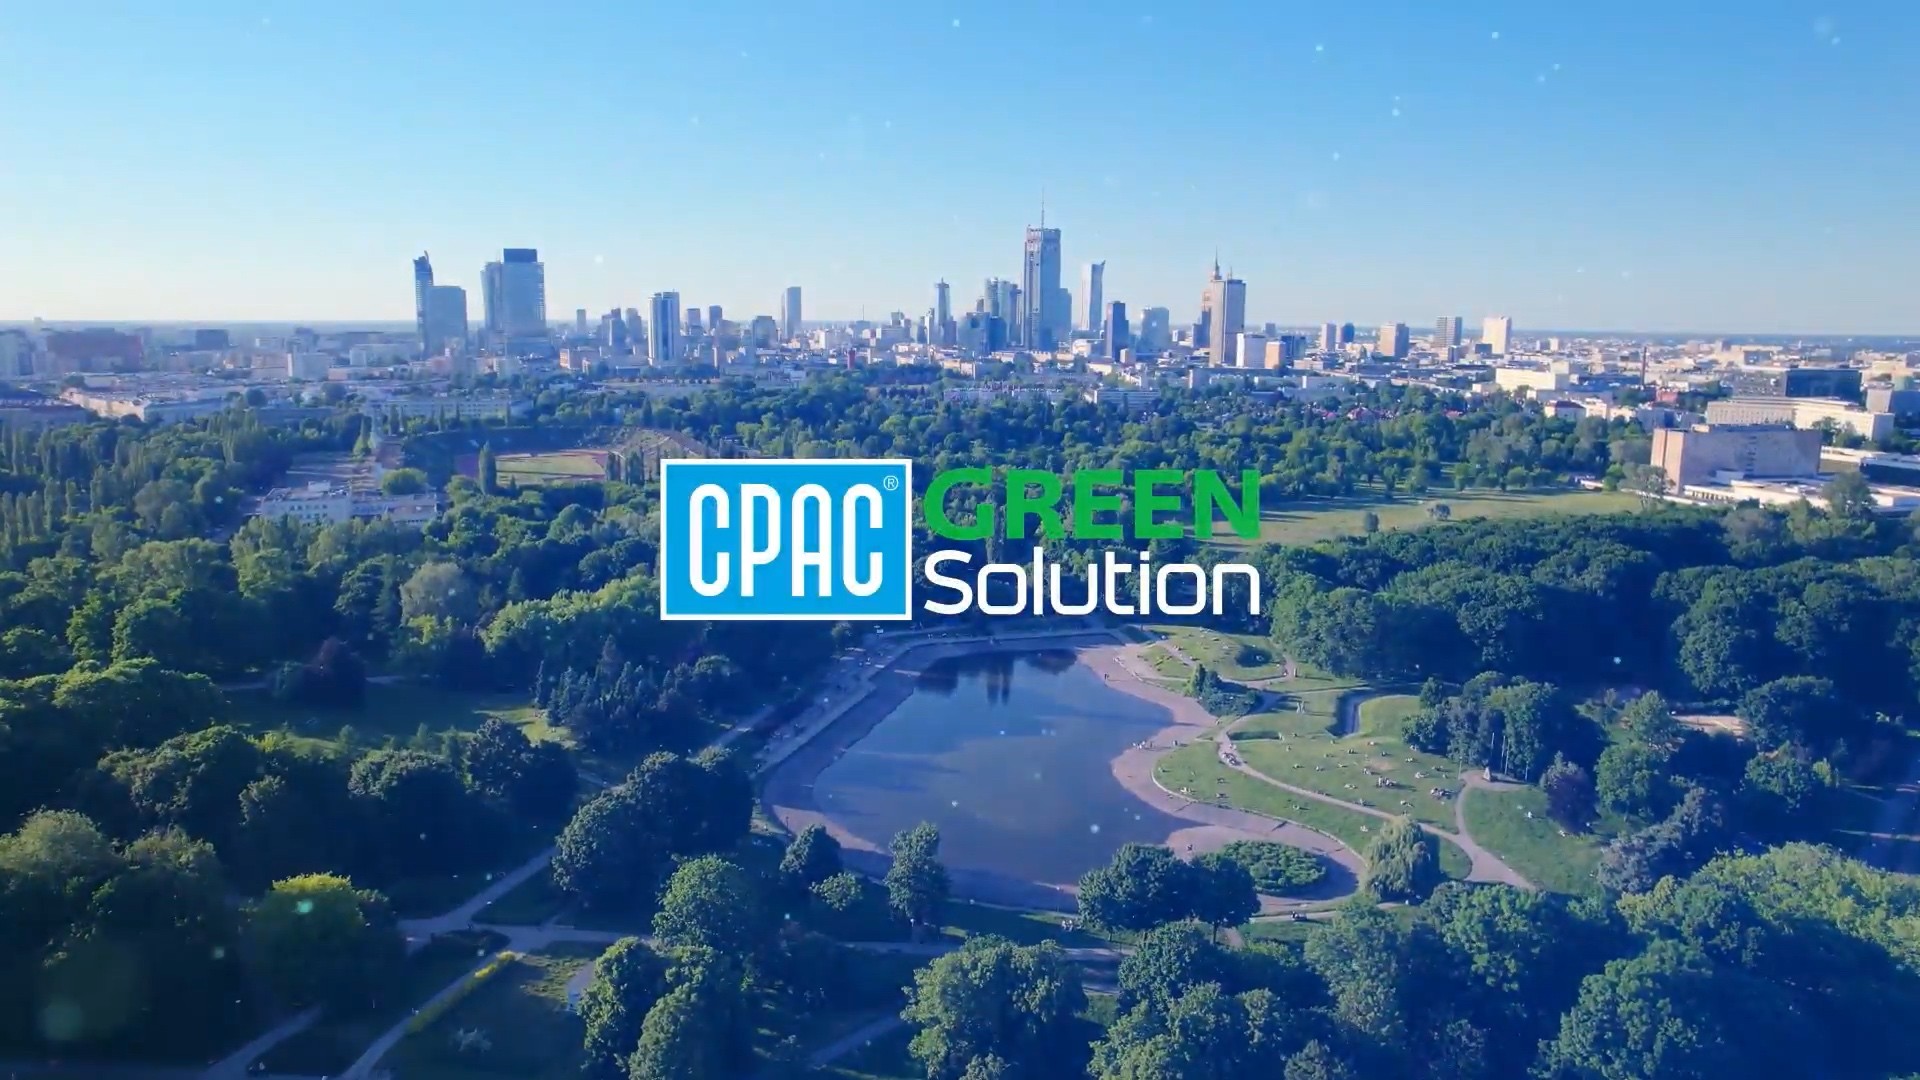 “CPAC Green Solution” สะท้อนแนวคิดผู้ให้บริการโซลูชันก่อสร้างสีเขียว ผ่านแคมเปญโฆษณา “Time to Change to CPAC Green Solution”